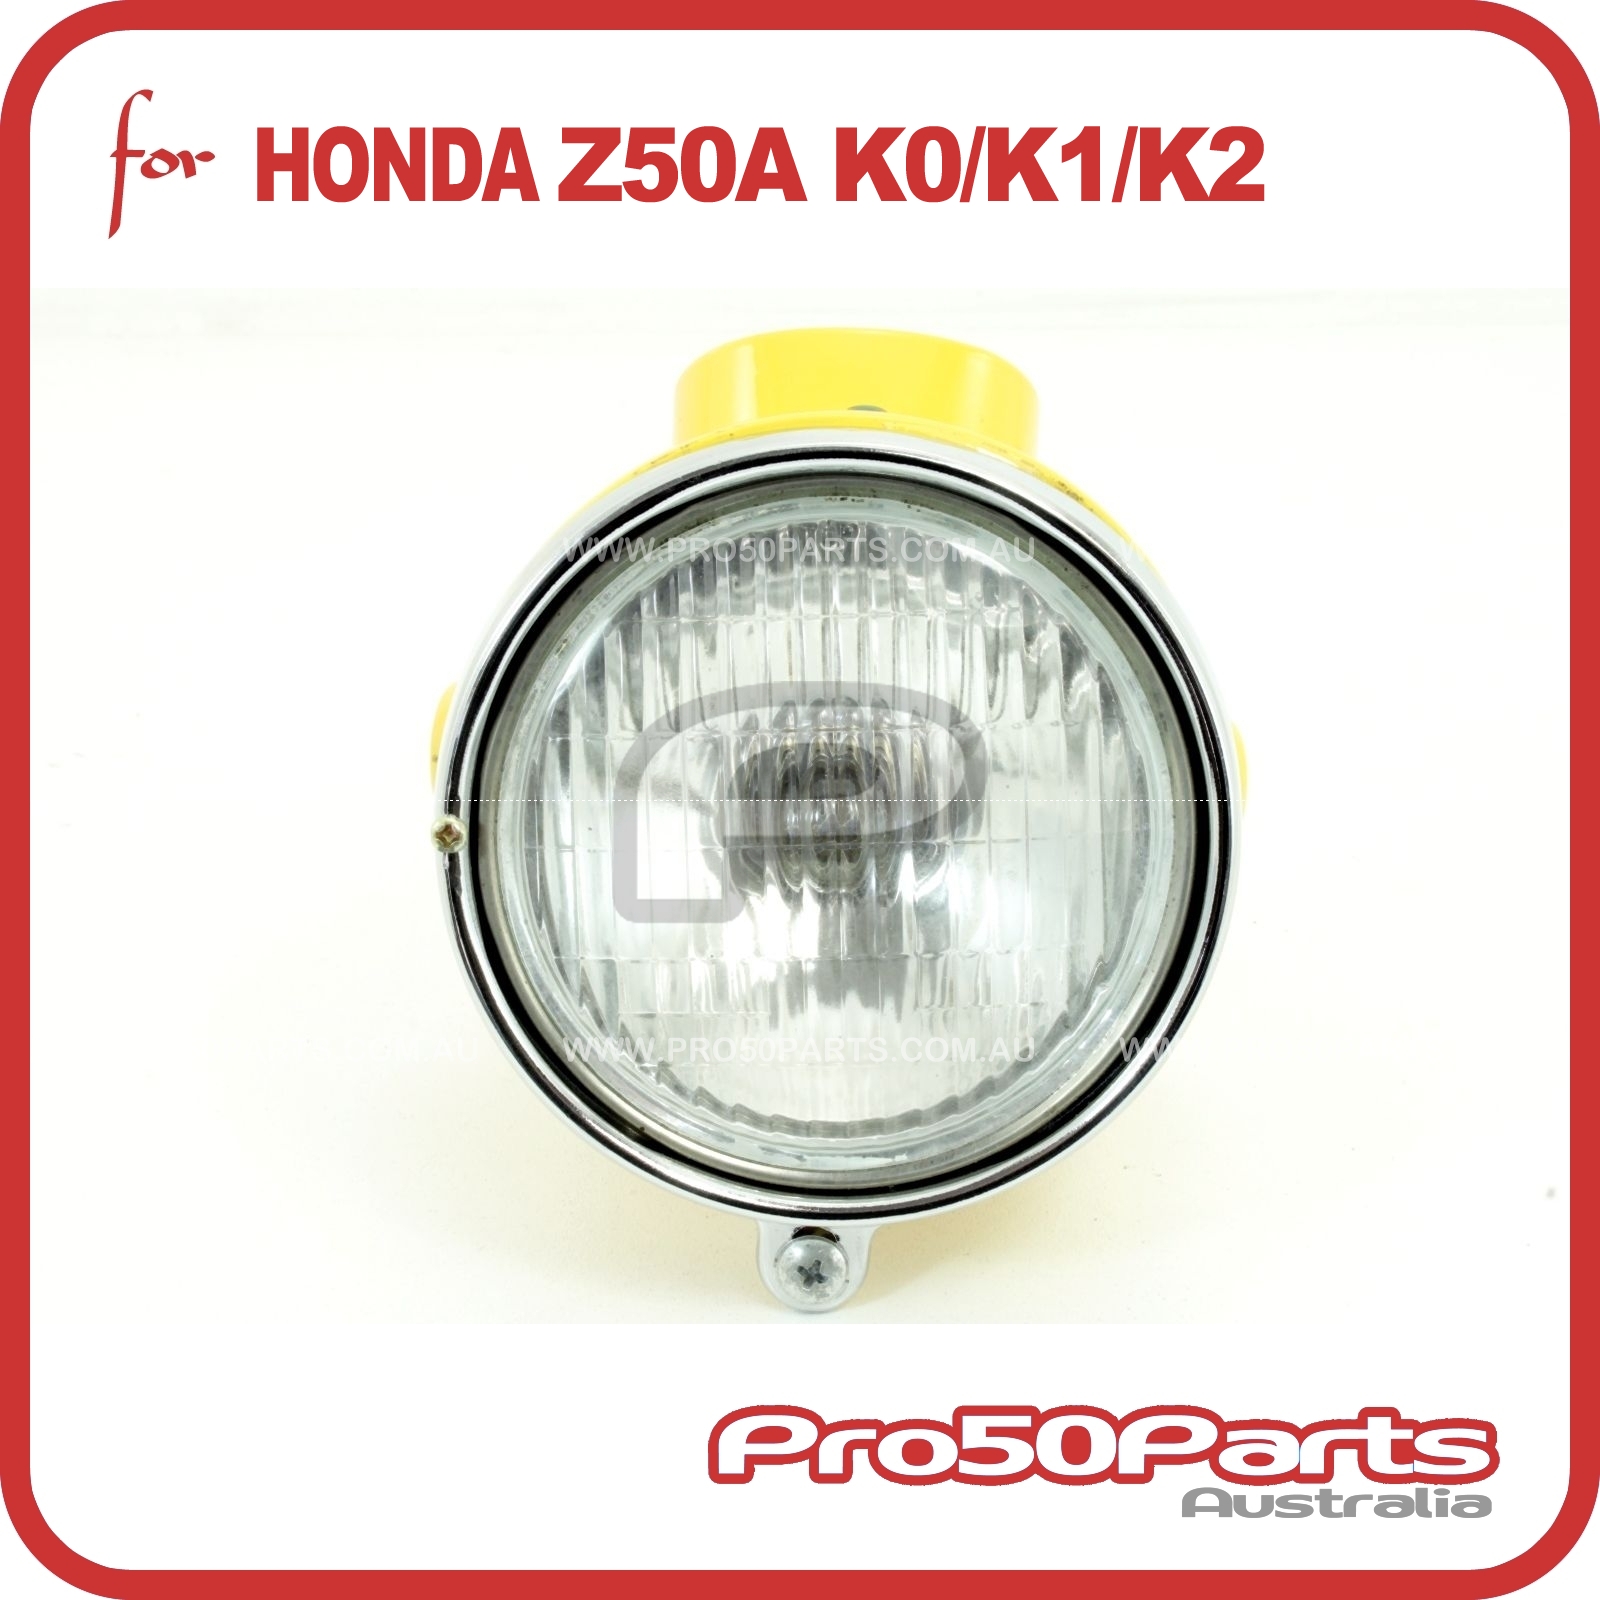 NiceCNC Headlight Lamp Socket For Honda Z50 Z50A K3-K6 ST70 Dax with 6V 25W Bulb 